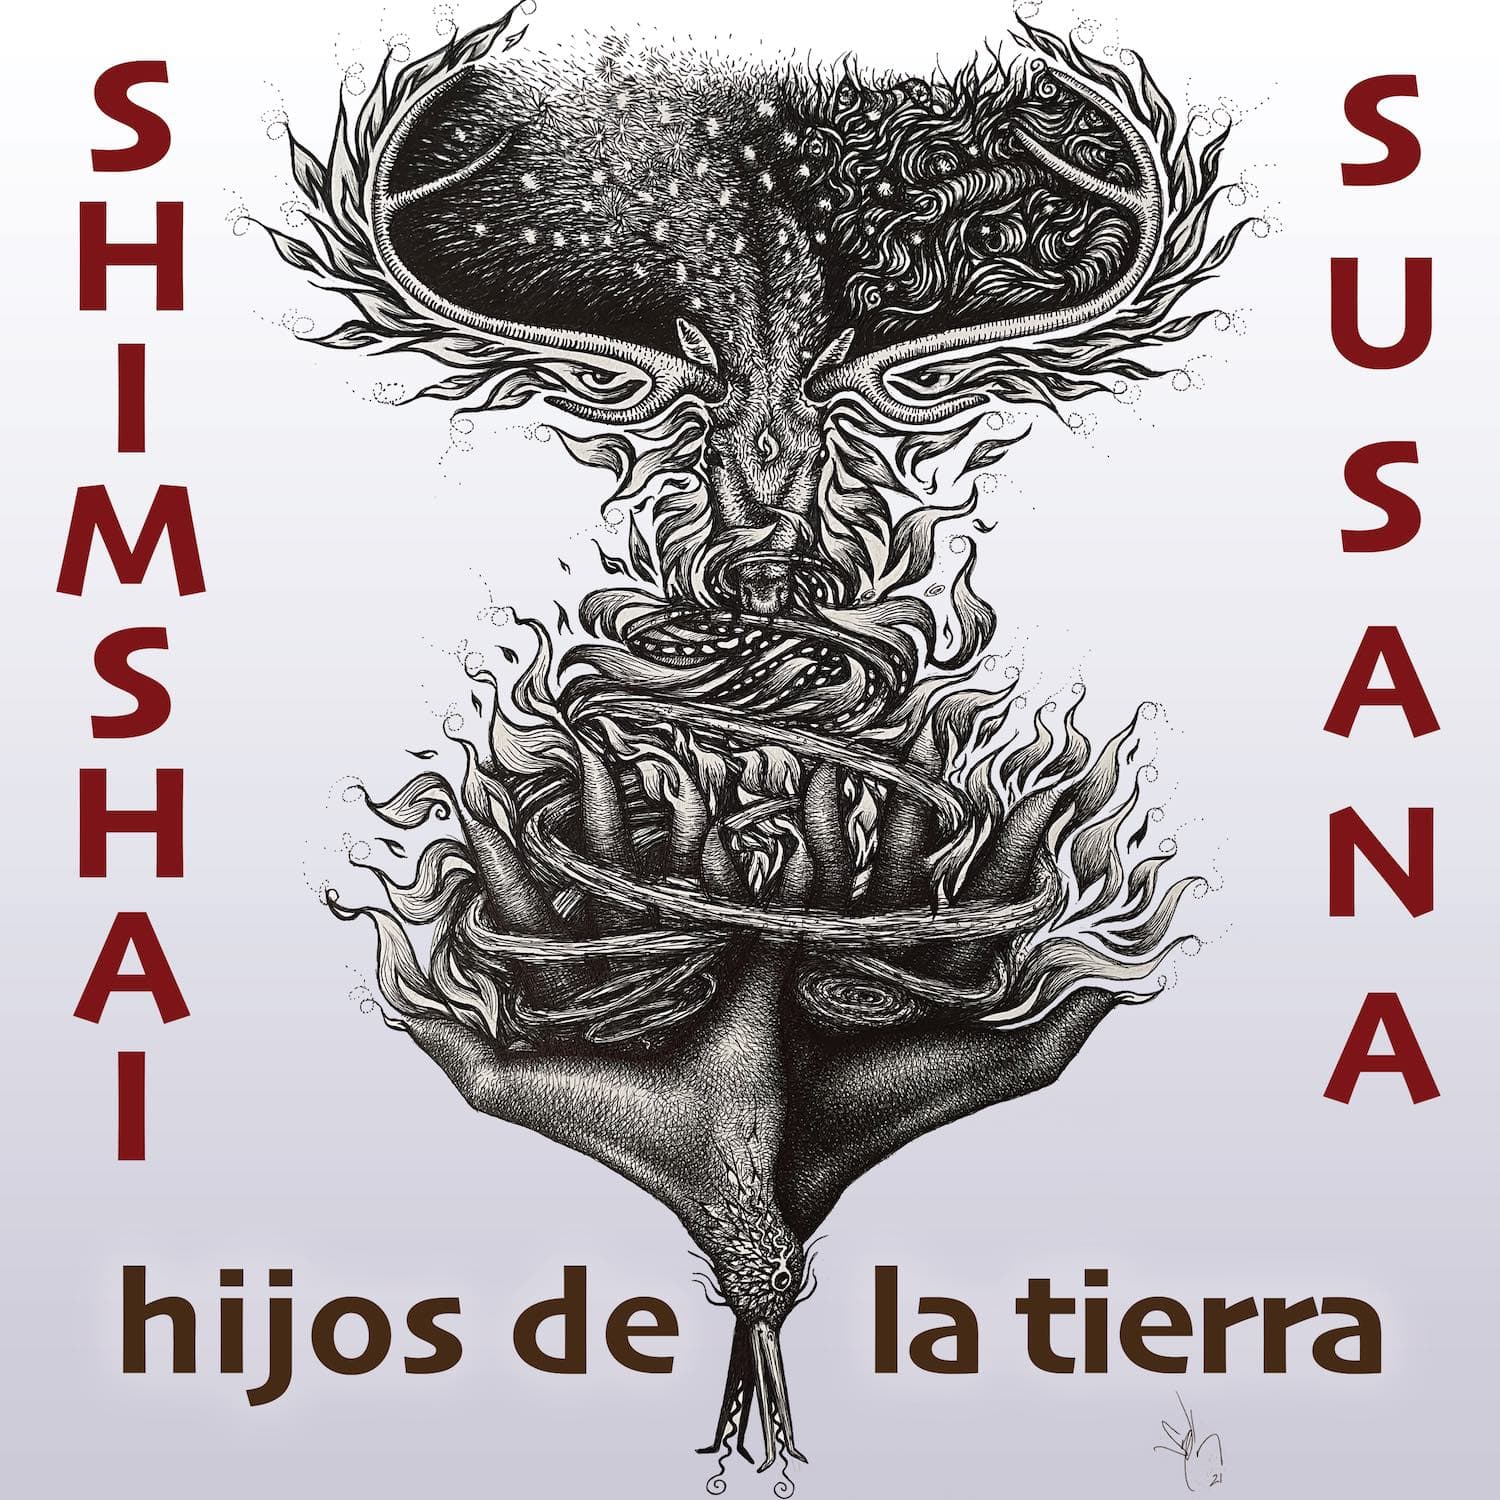 Hijos de la Tierra traditional medicine music south american folk song arranged by Shimshai and released by Shimshai & Susana